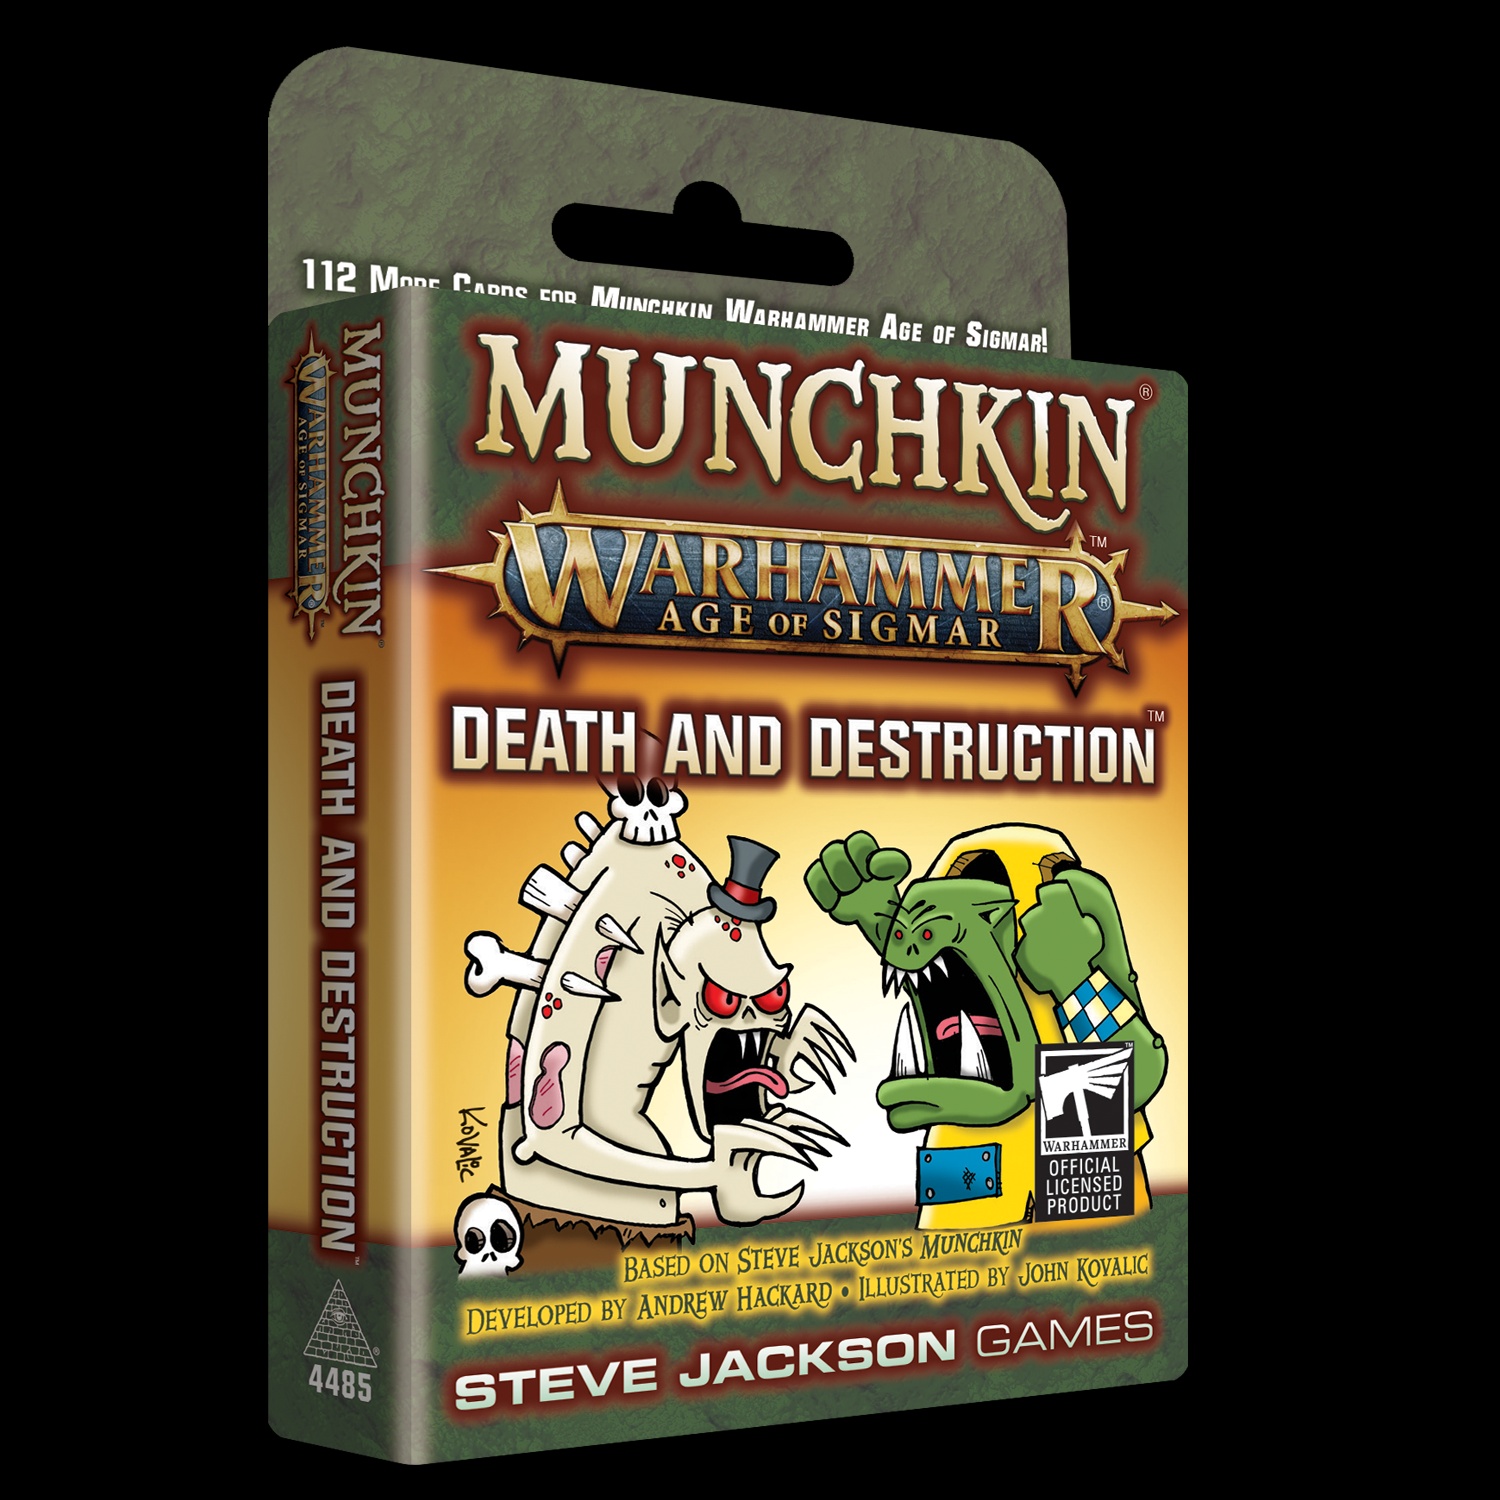 Munchkin Warhammer Age of Sigmar Death and Destruction